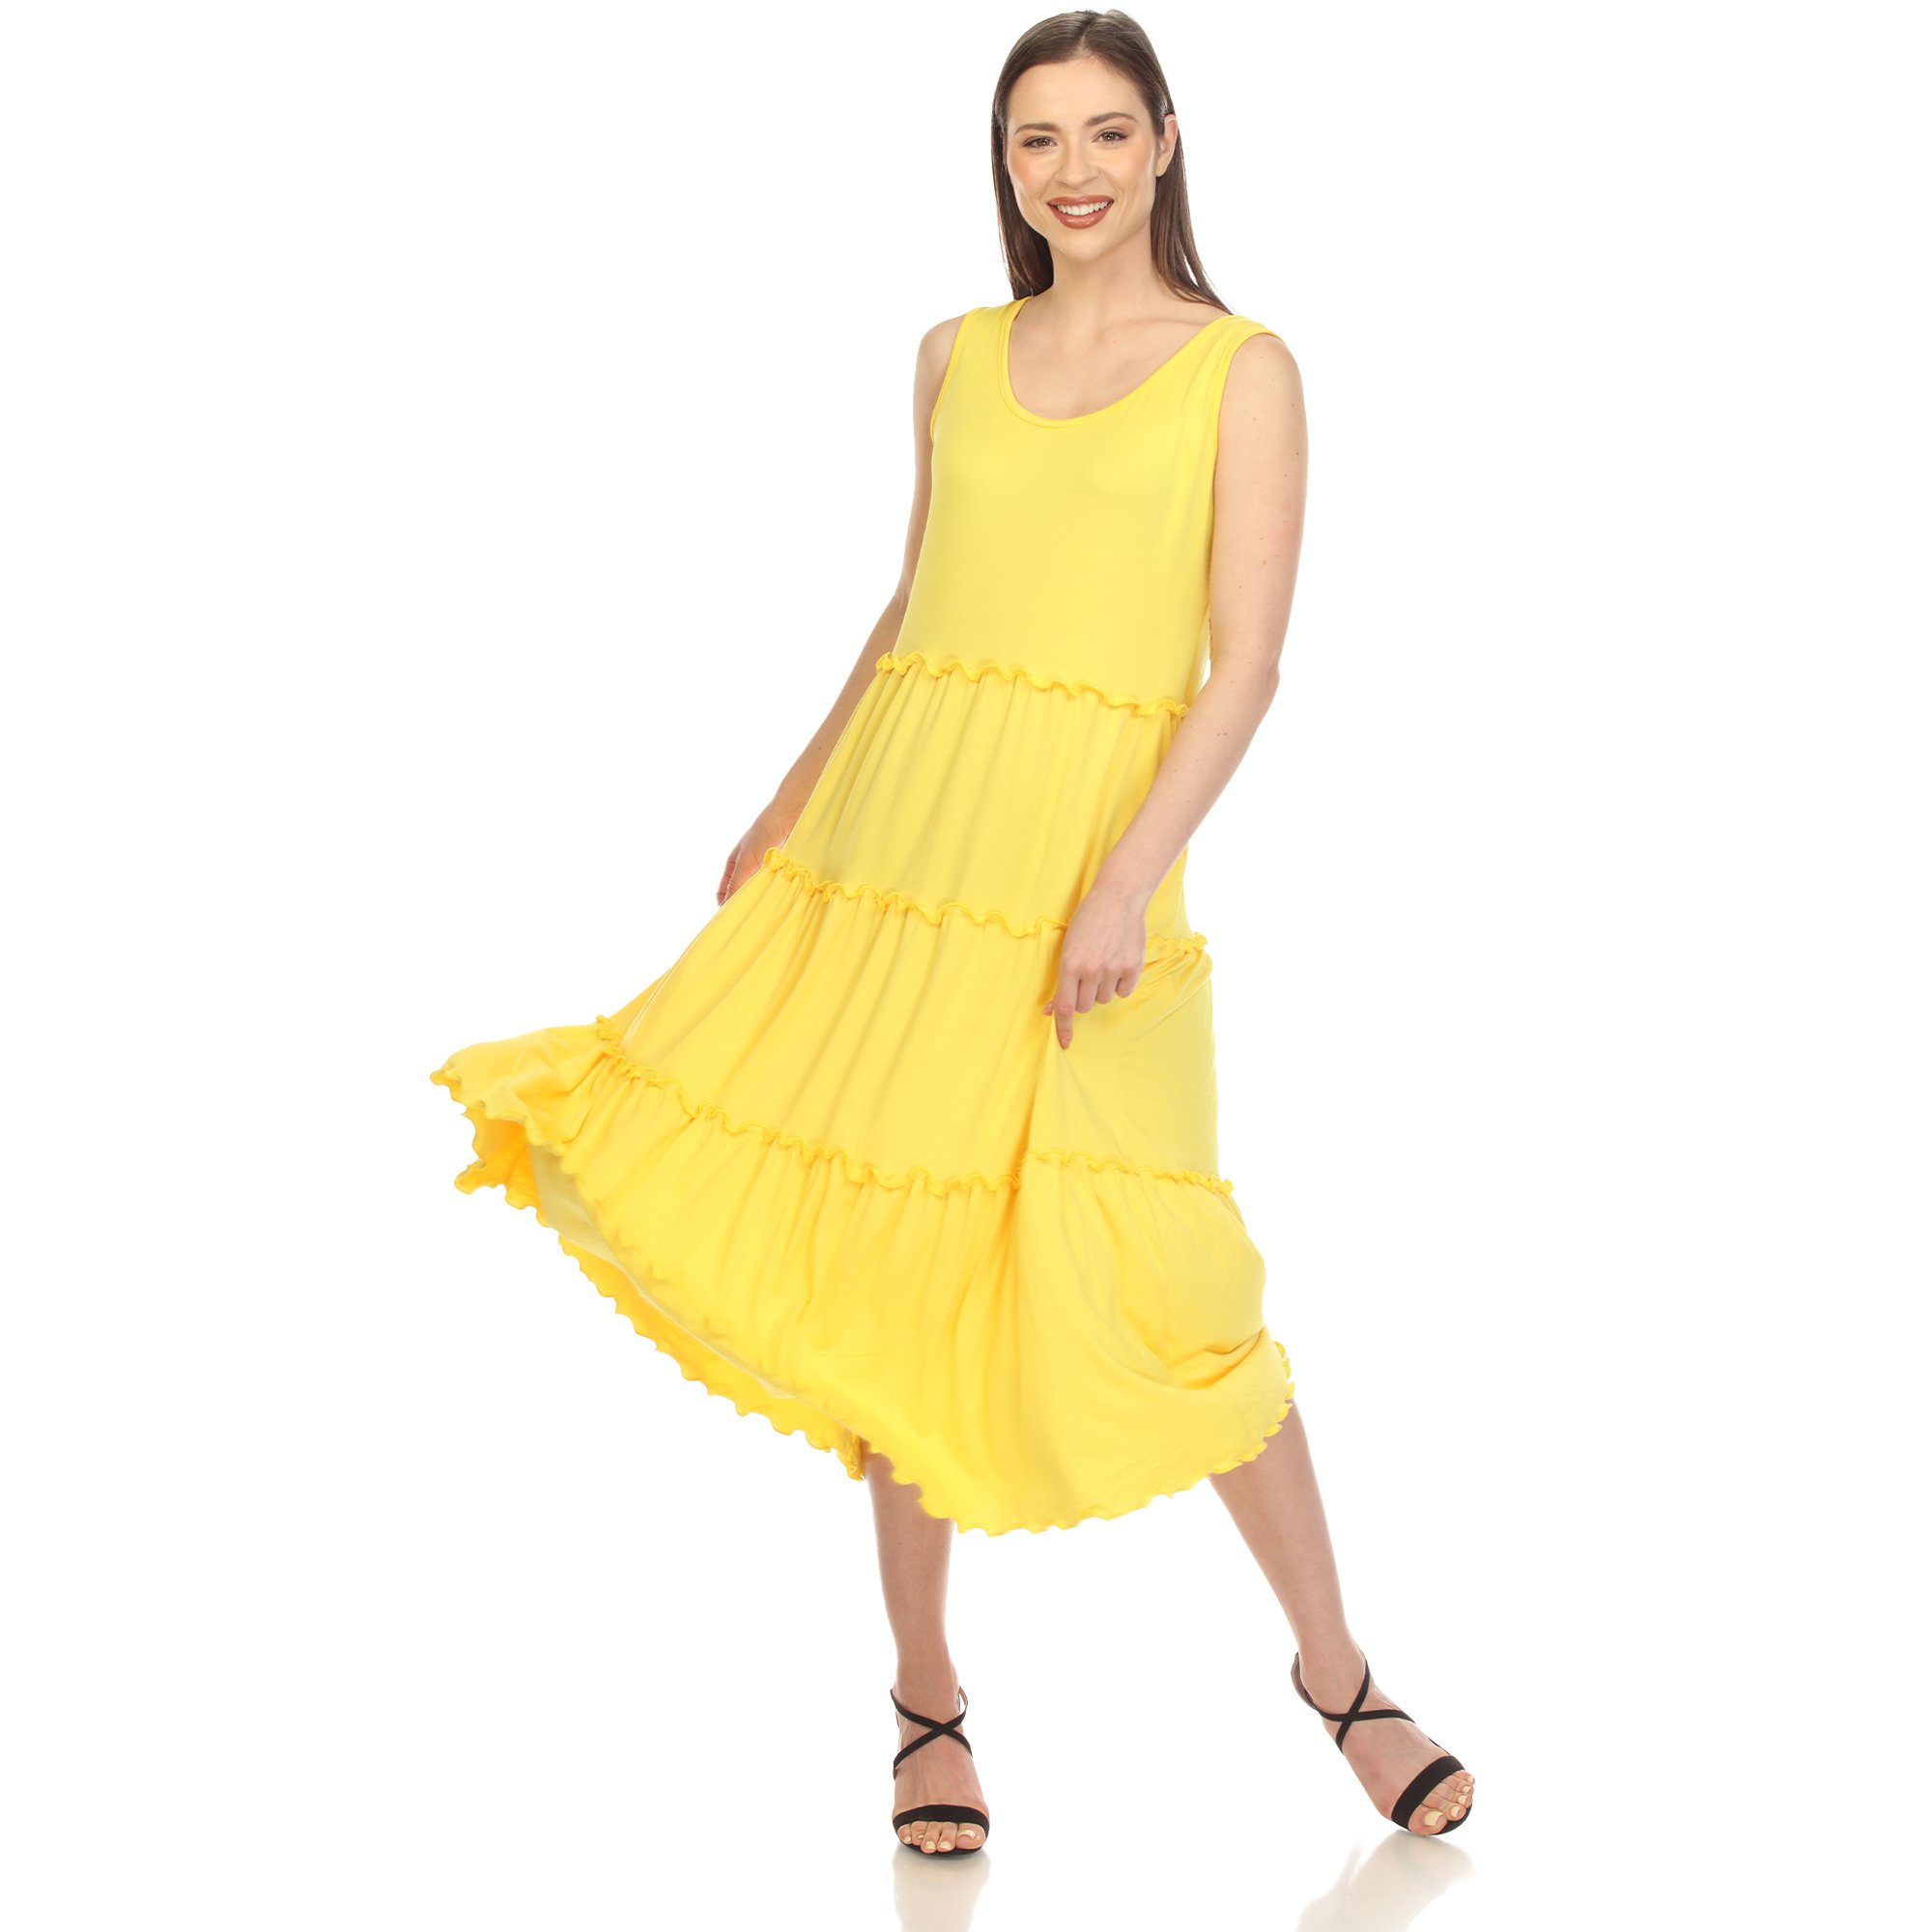 White Mark Women's Scoop Neck Tiered Midi Dress - Canary Yellow, 3X